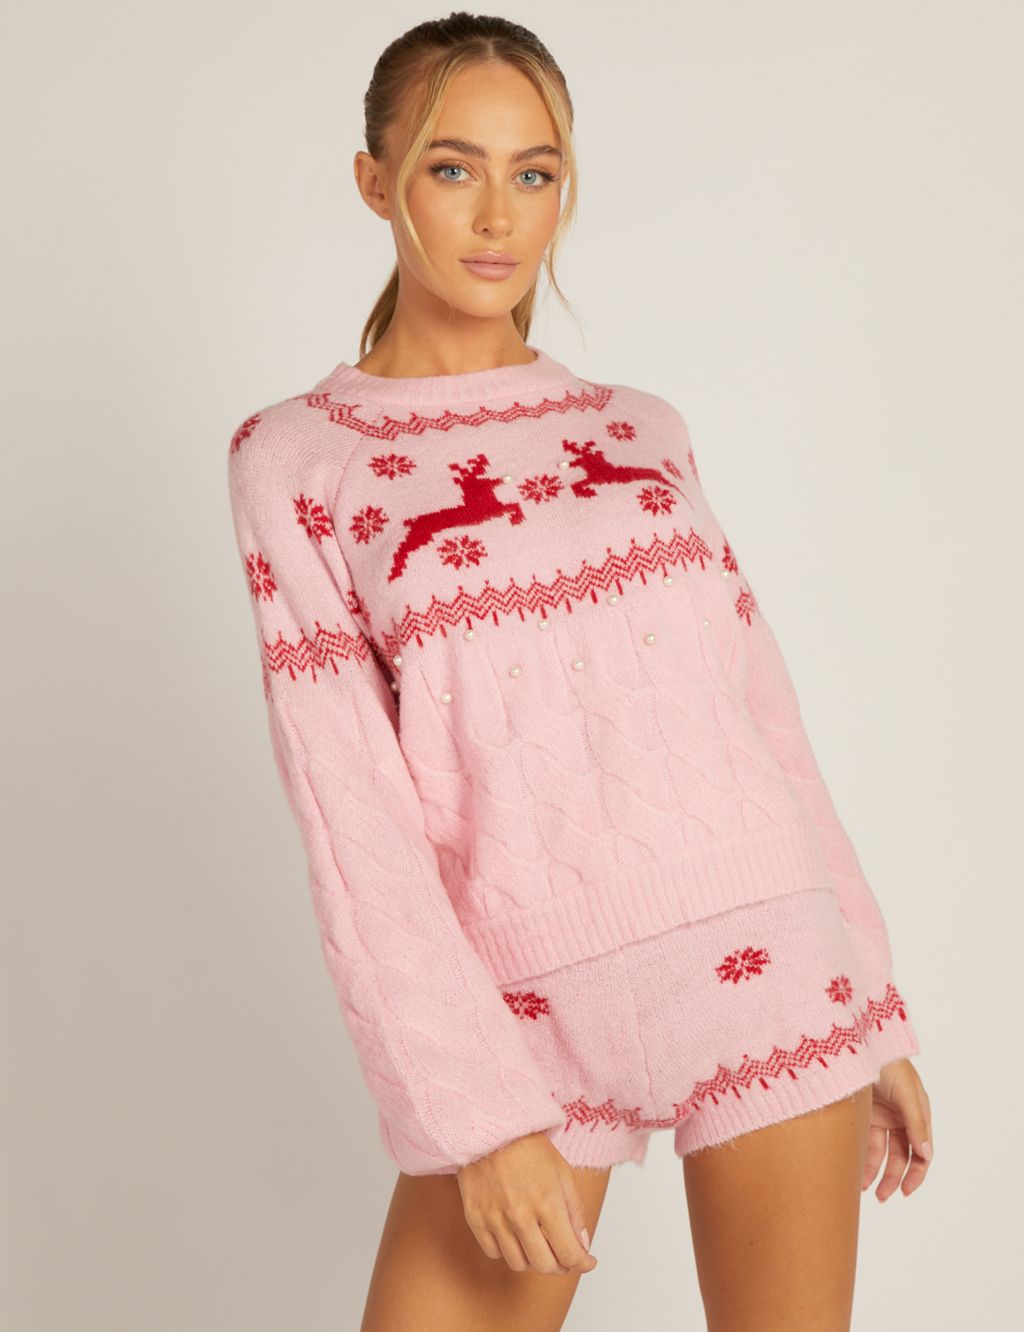 Fair Isle Reindeer Lounge Sweatshirt image 1